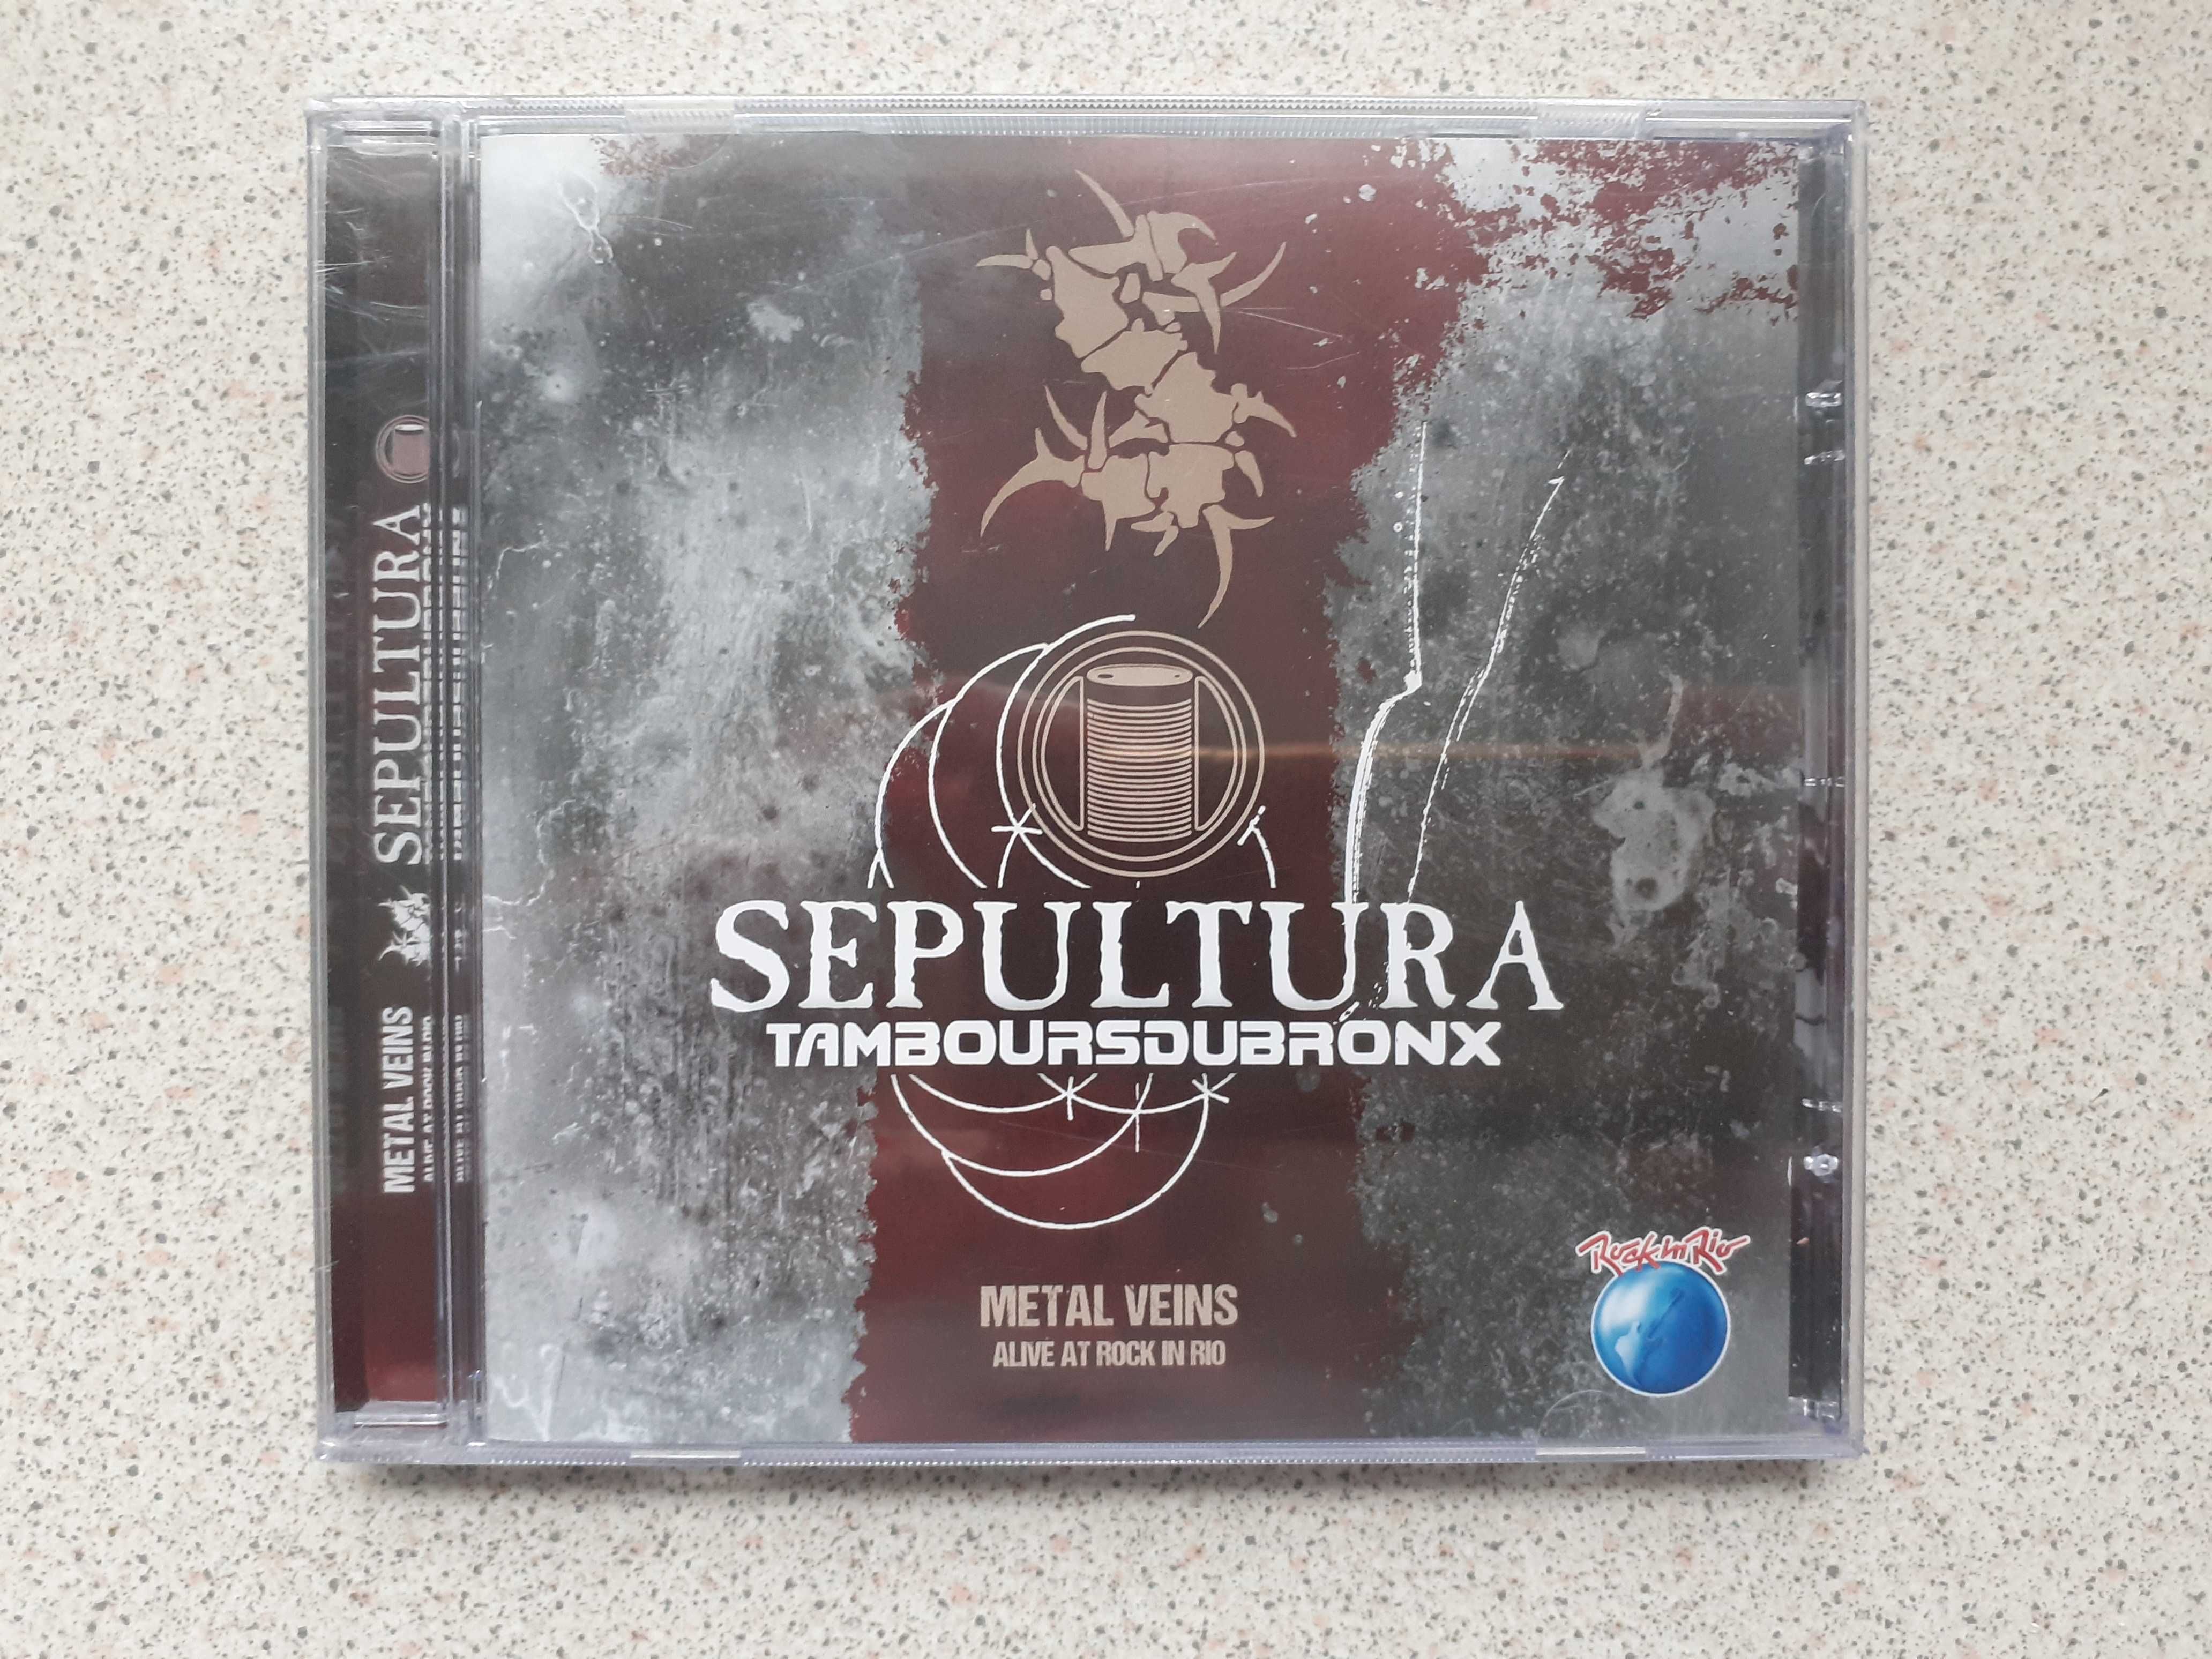 CD - Sepultura - Metal veins - alive in rio  NOWA W FOLII